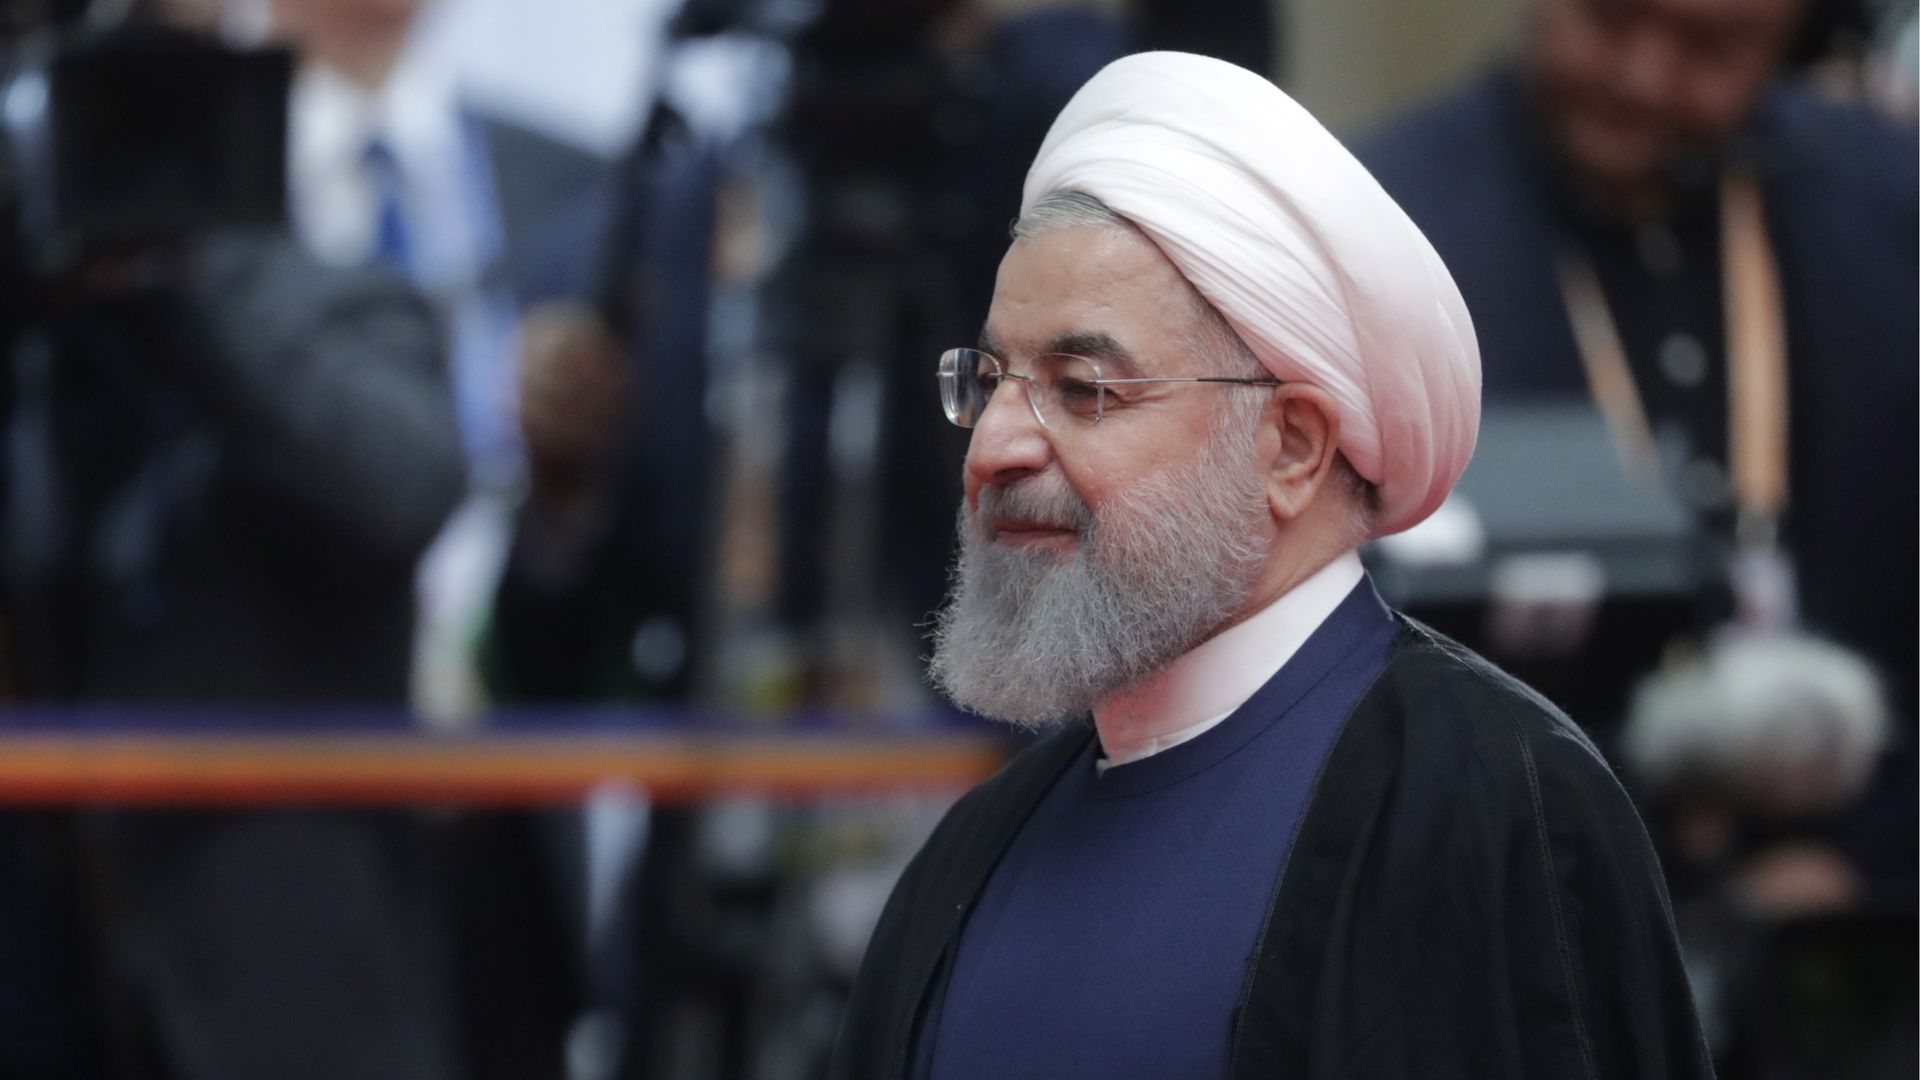 Iranian President Hassan Rouhani walks by photographers